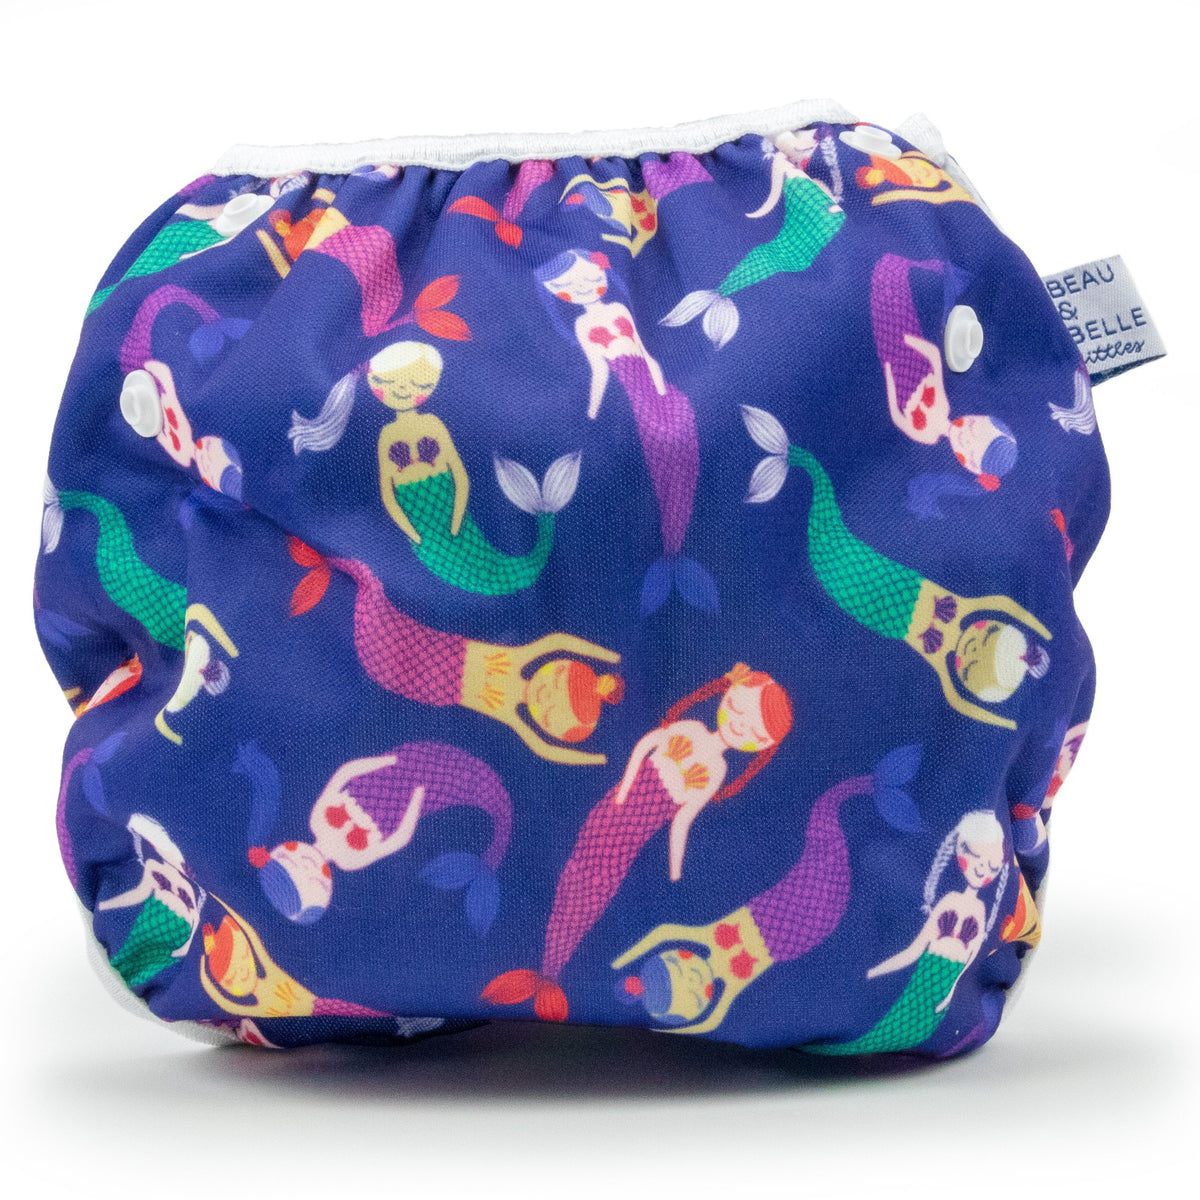 Nageuret Premium One-Size Reusable Swim Diaper, Fits 3-36mo